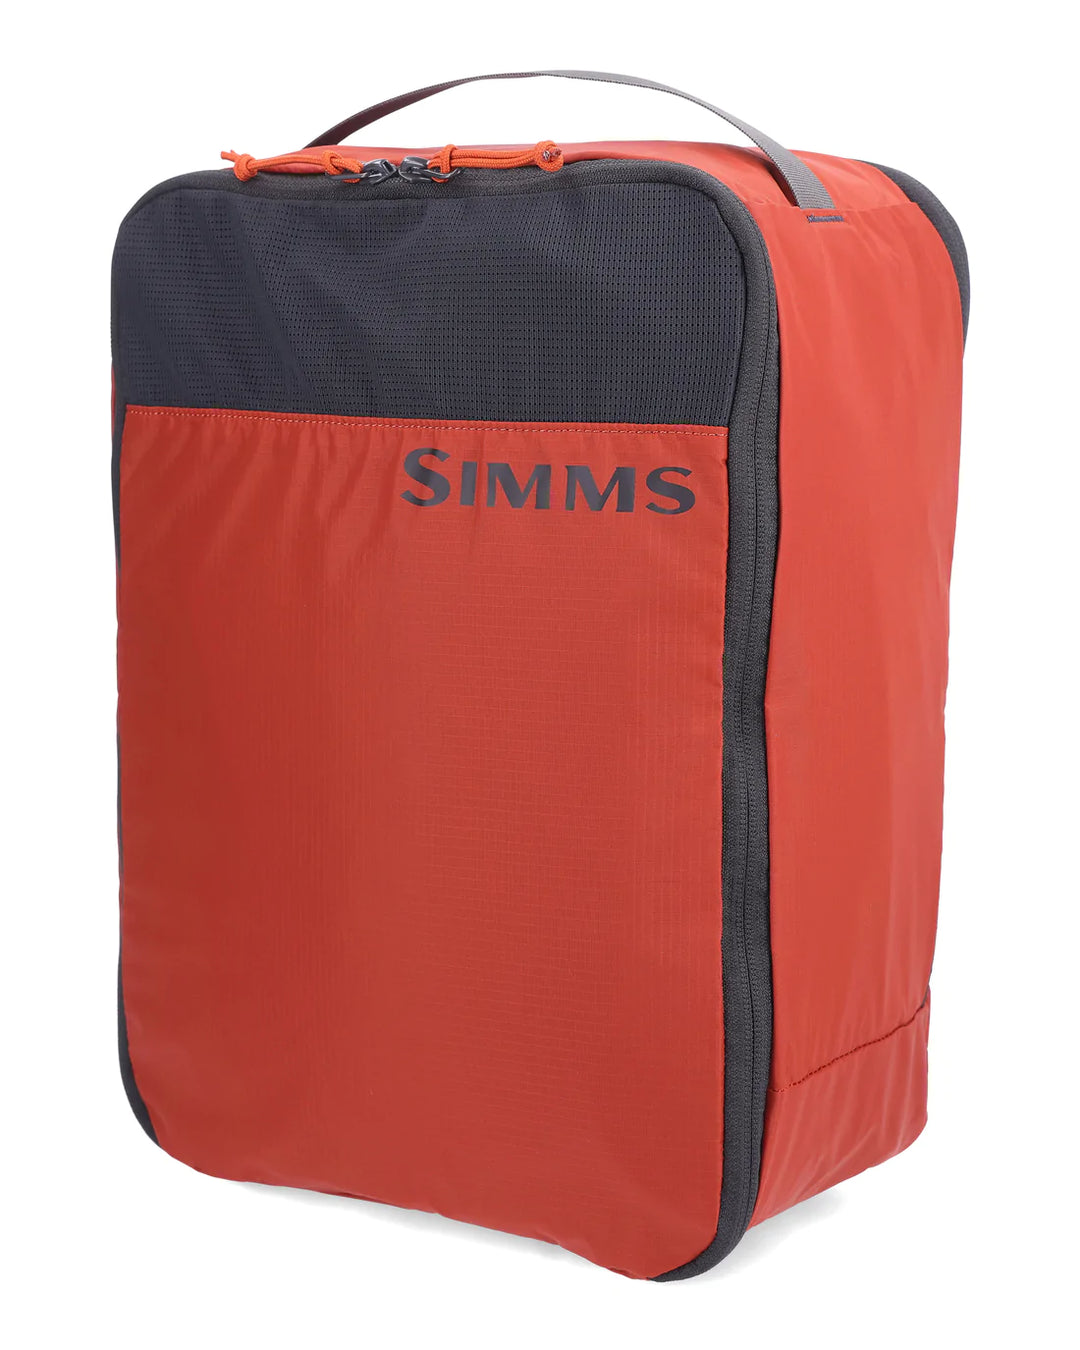 Simms - GTS Packing Kit - 3 Pack